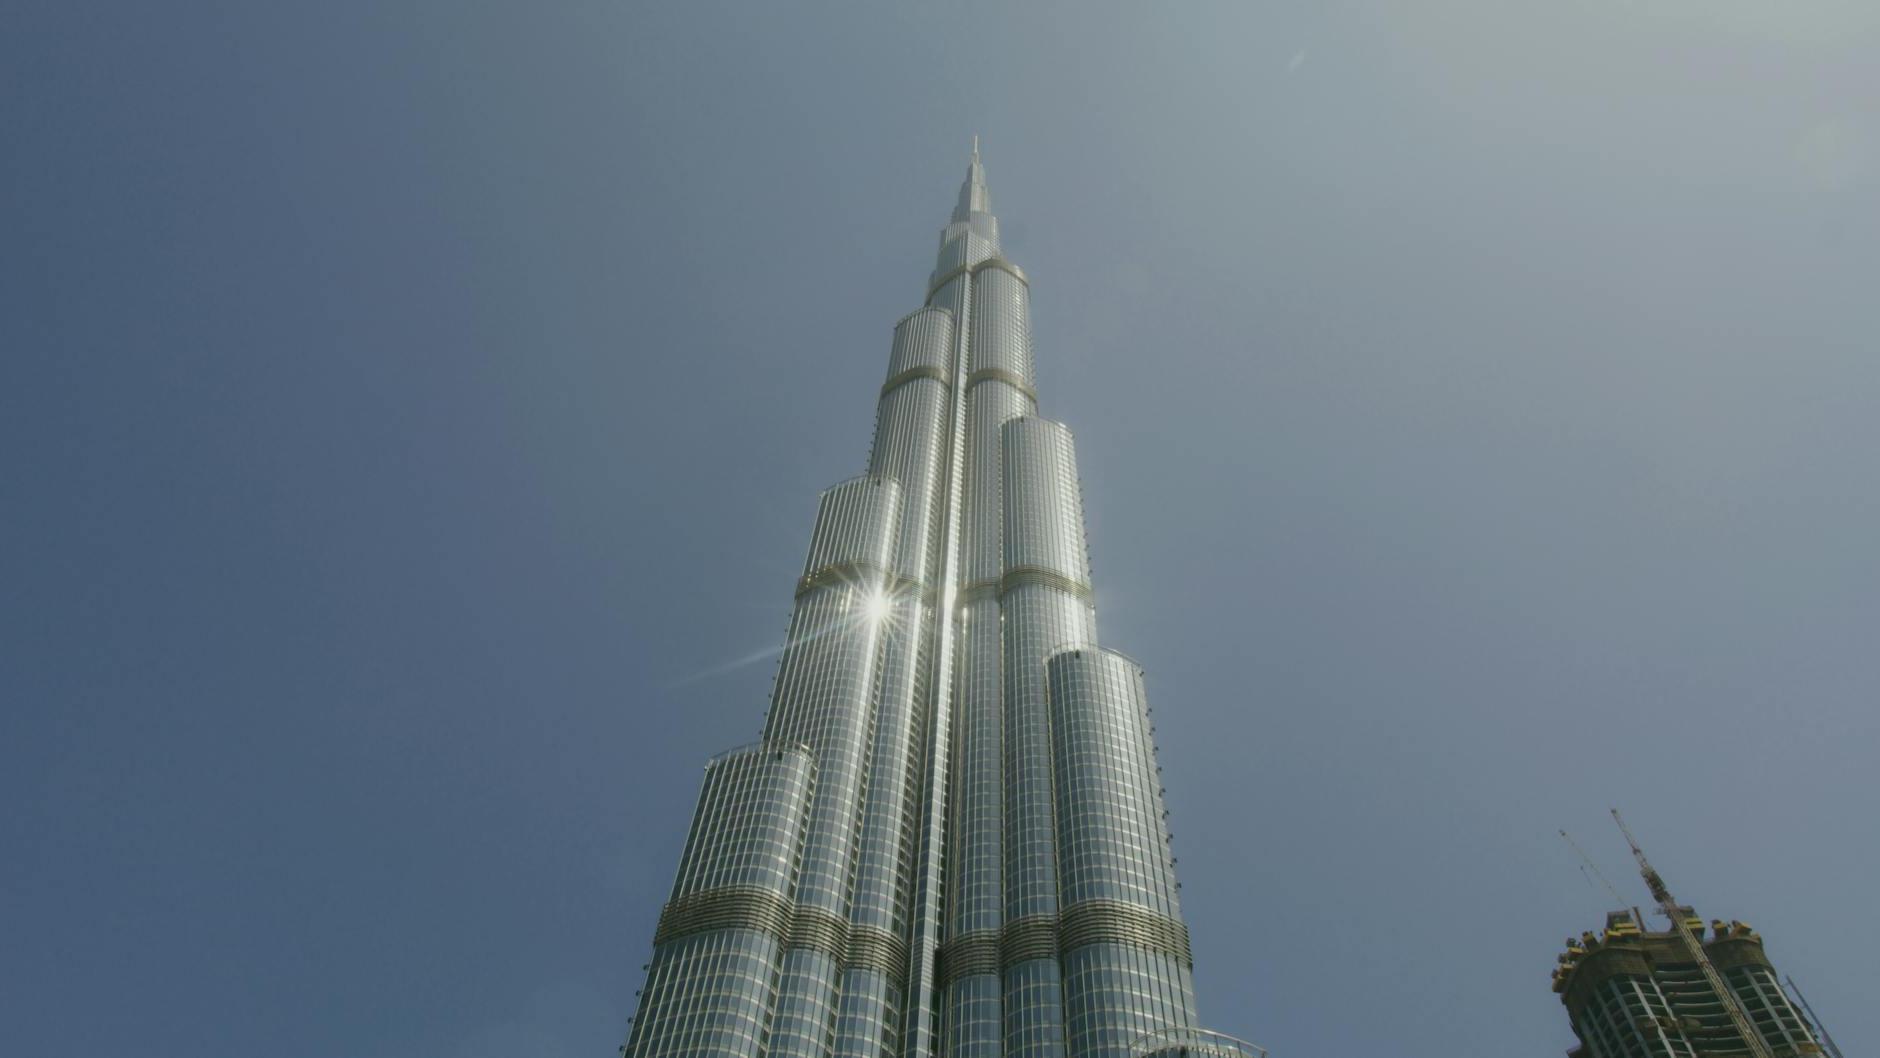 Burj Khalifa Tower under Blue Sky